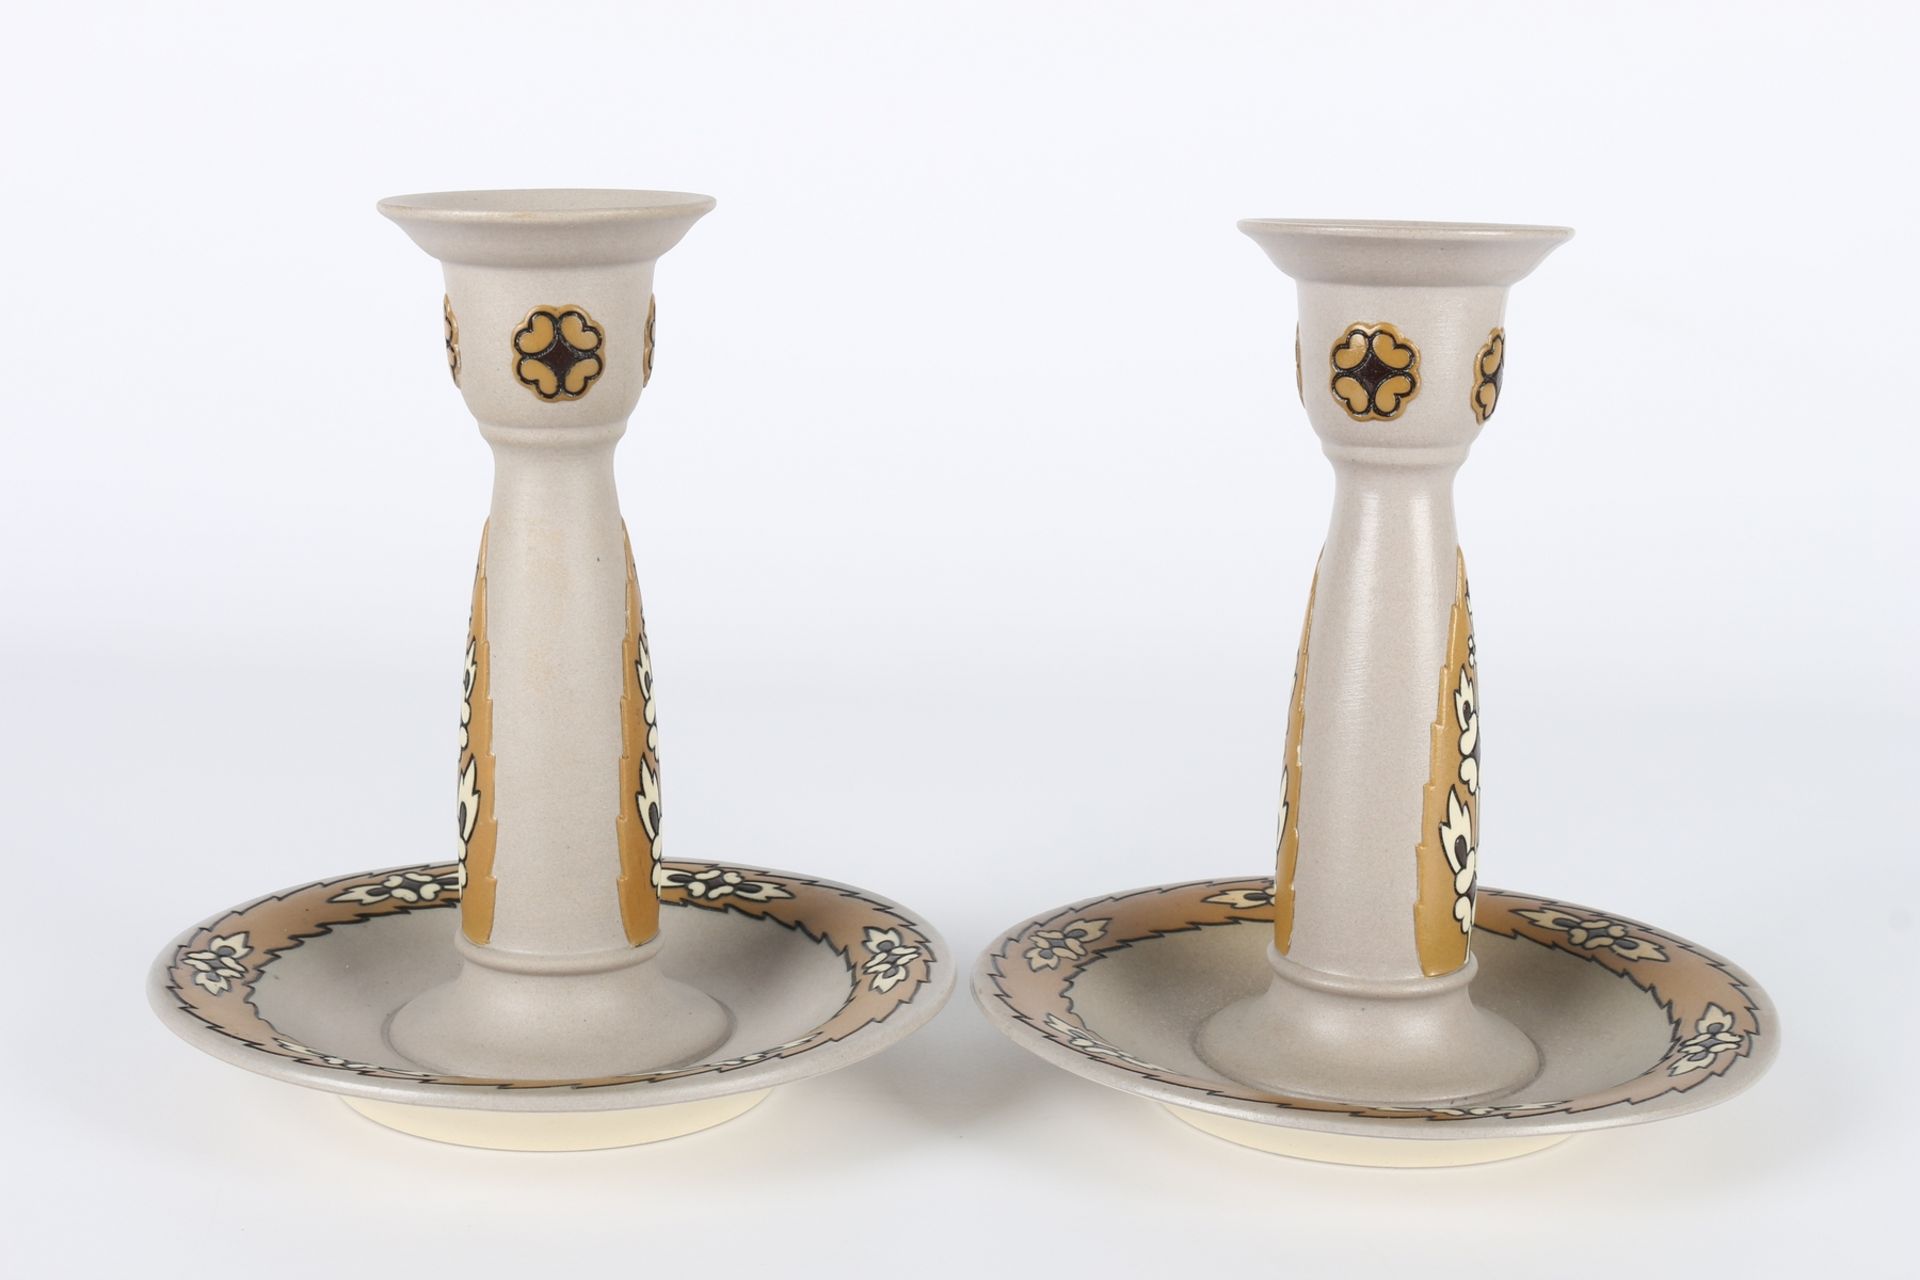 Mettlach Leuchterpaar, pair of candlesticks, - Image 2 of 3